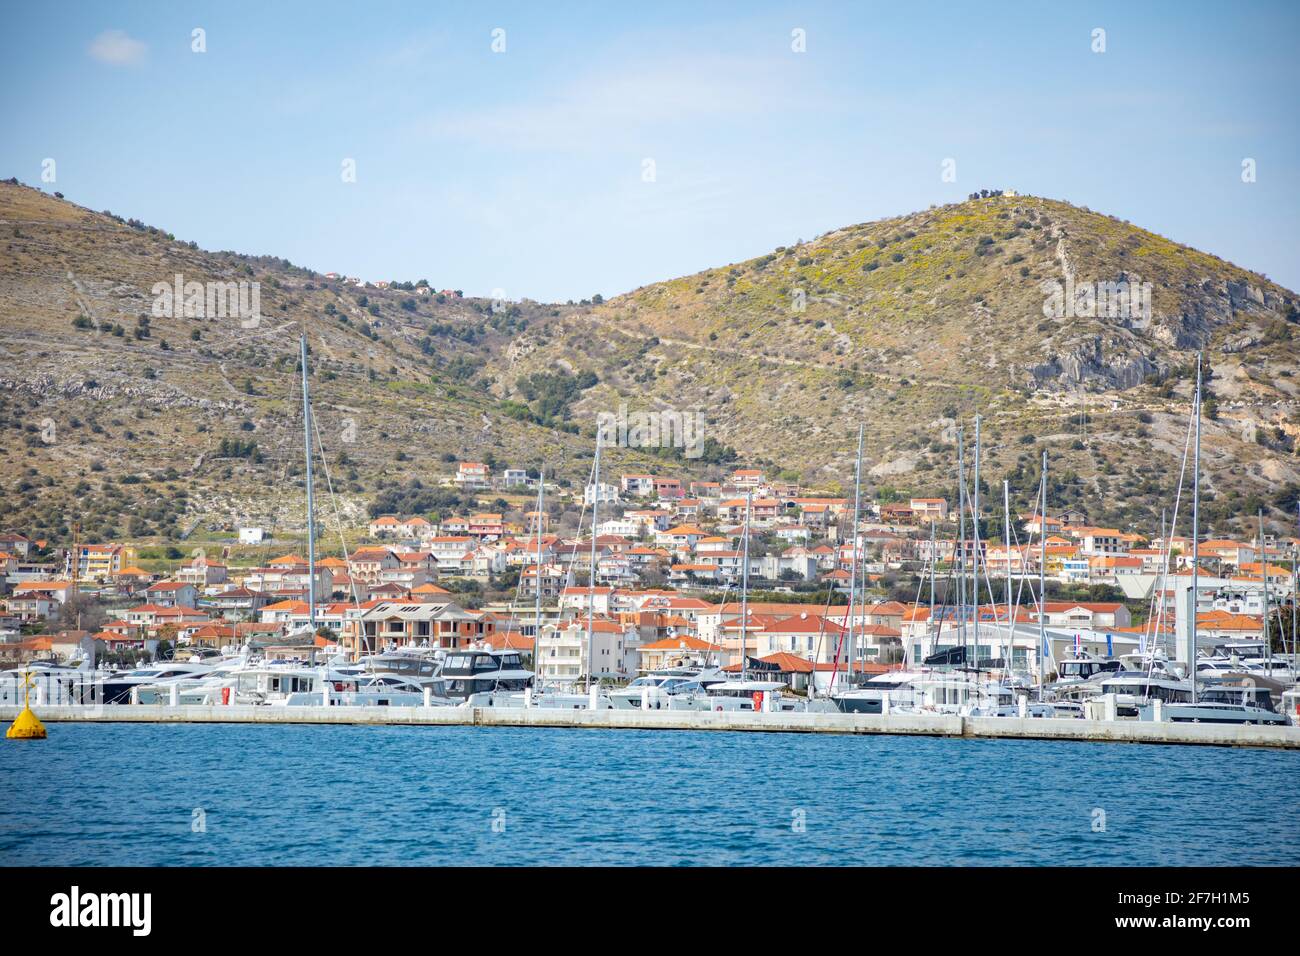 Trogir, Croatia - 27.03.2021: View from water of port and marina in Trogir, Croatia Stock Photo